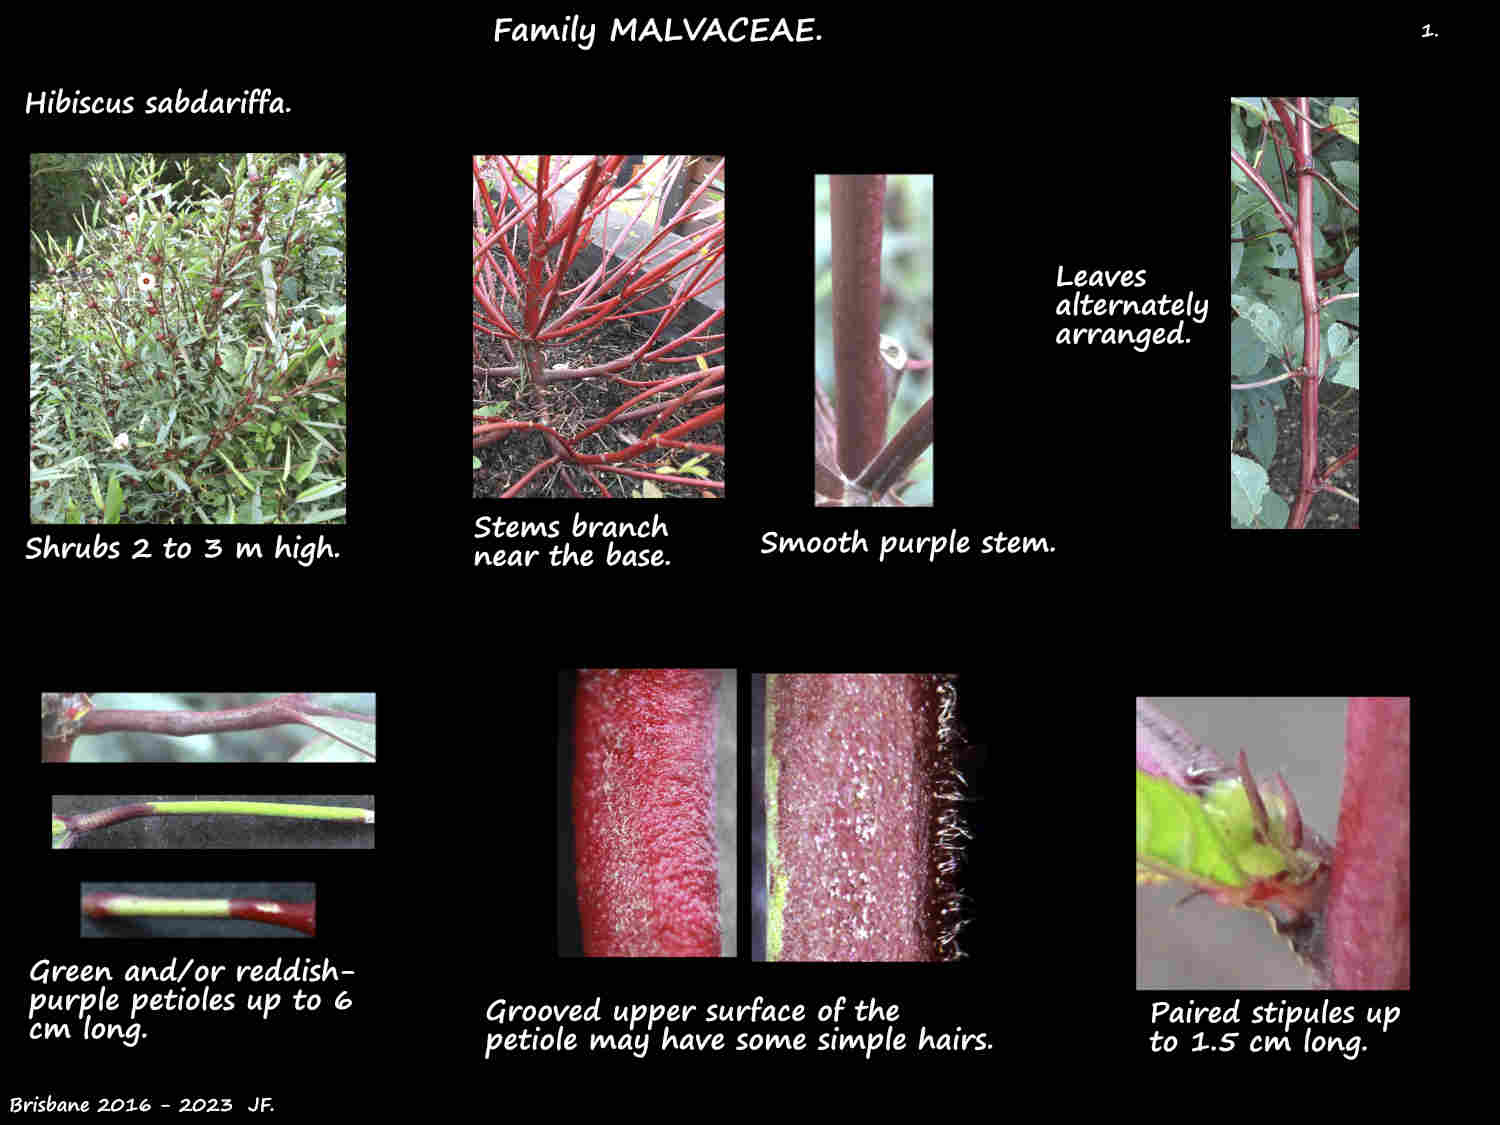 1 Hibiscus sabdariffa plant, stems & stipules